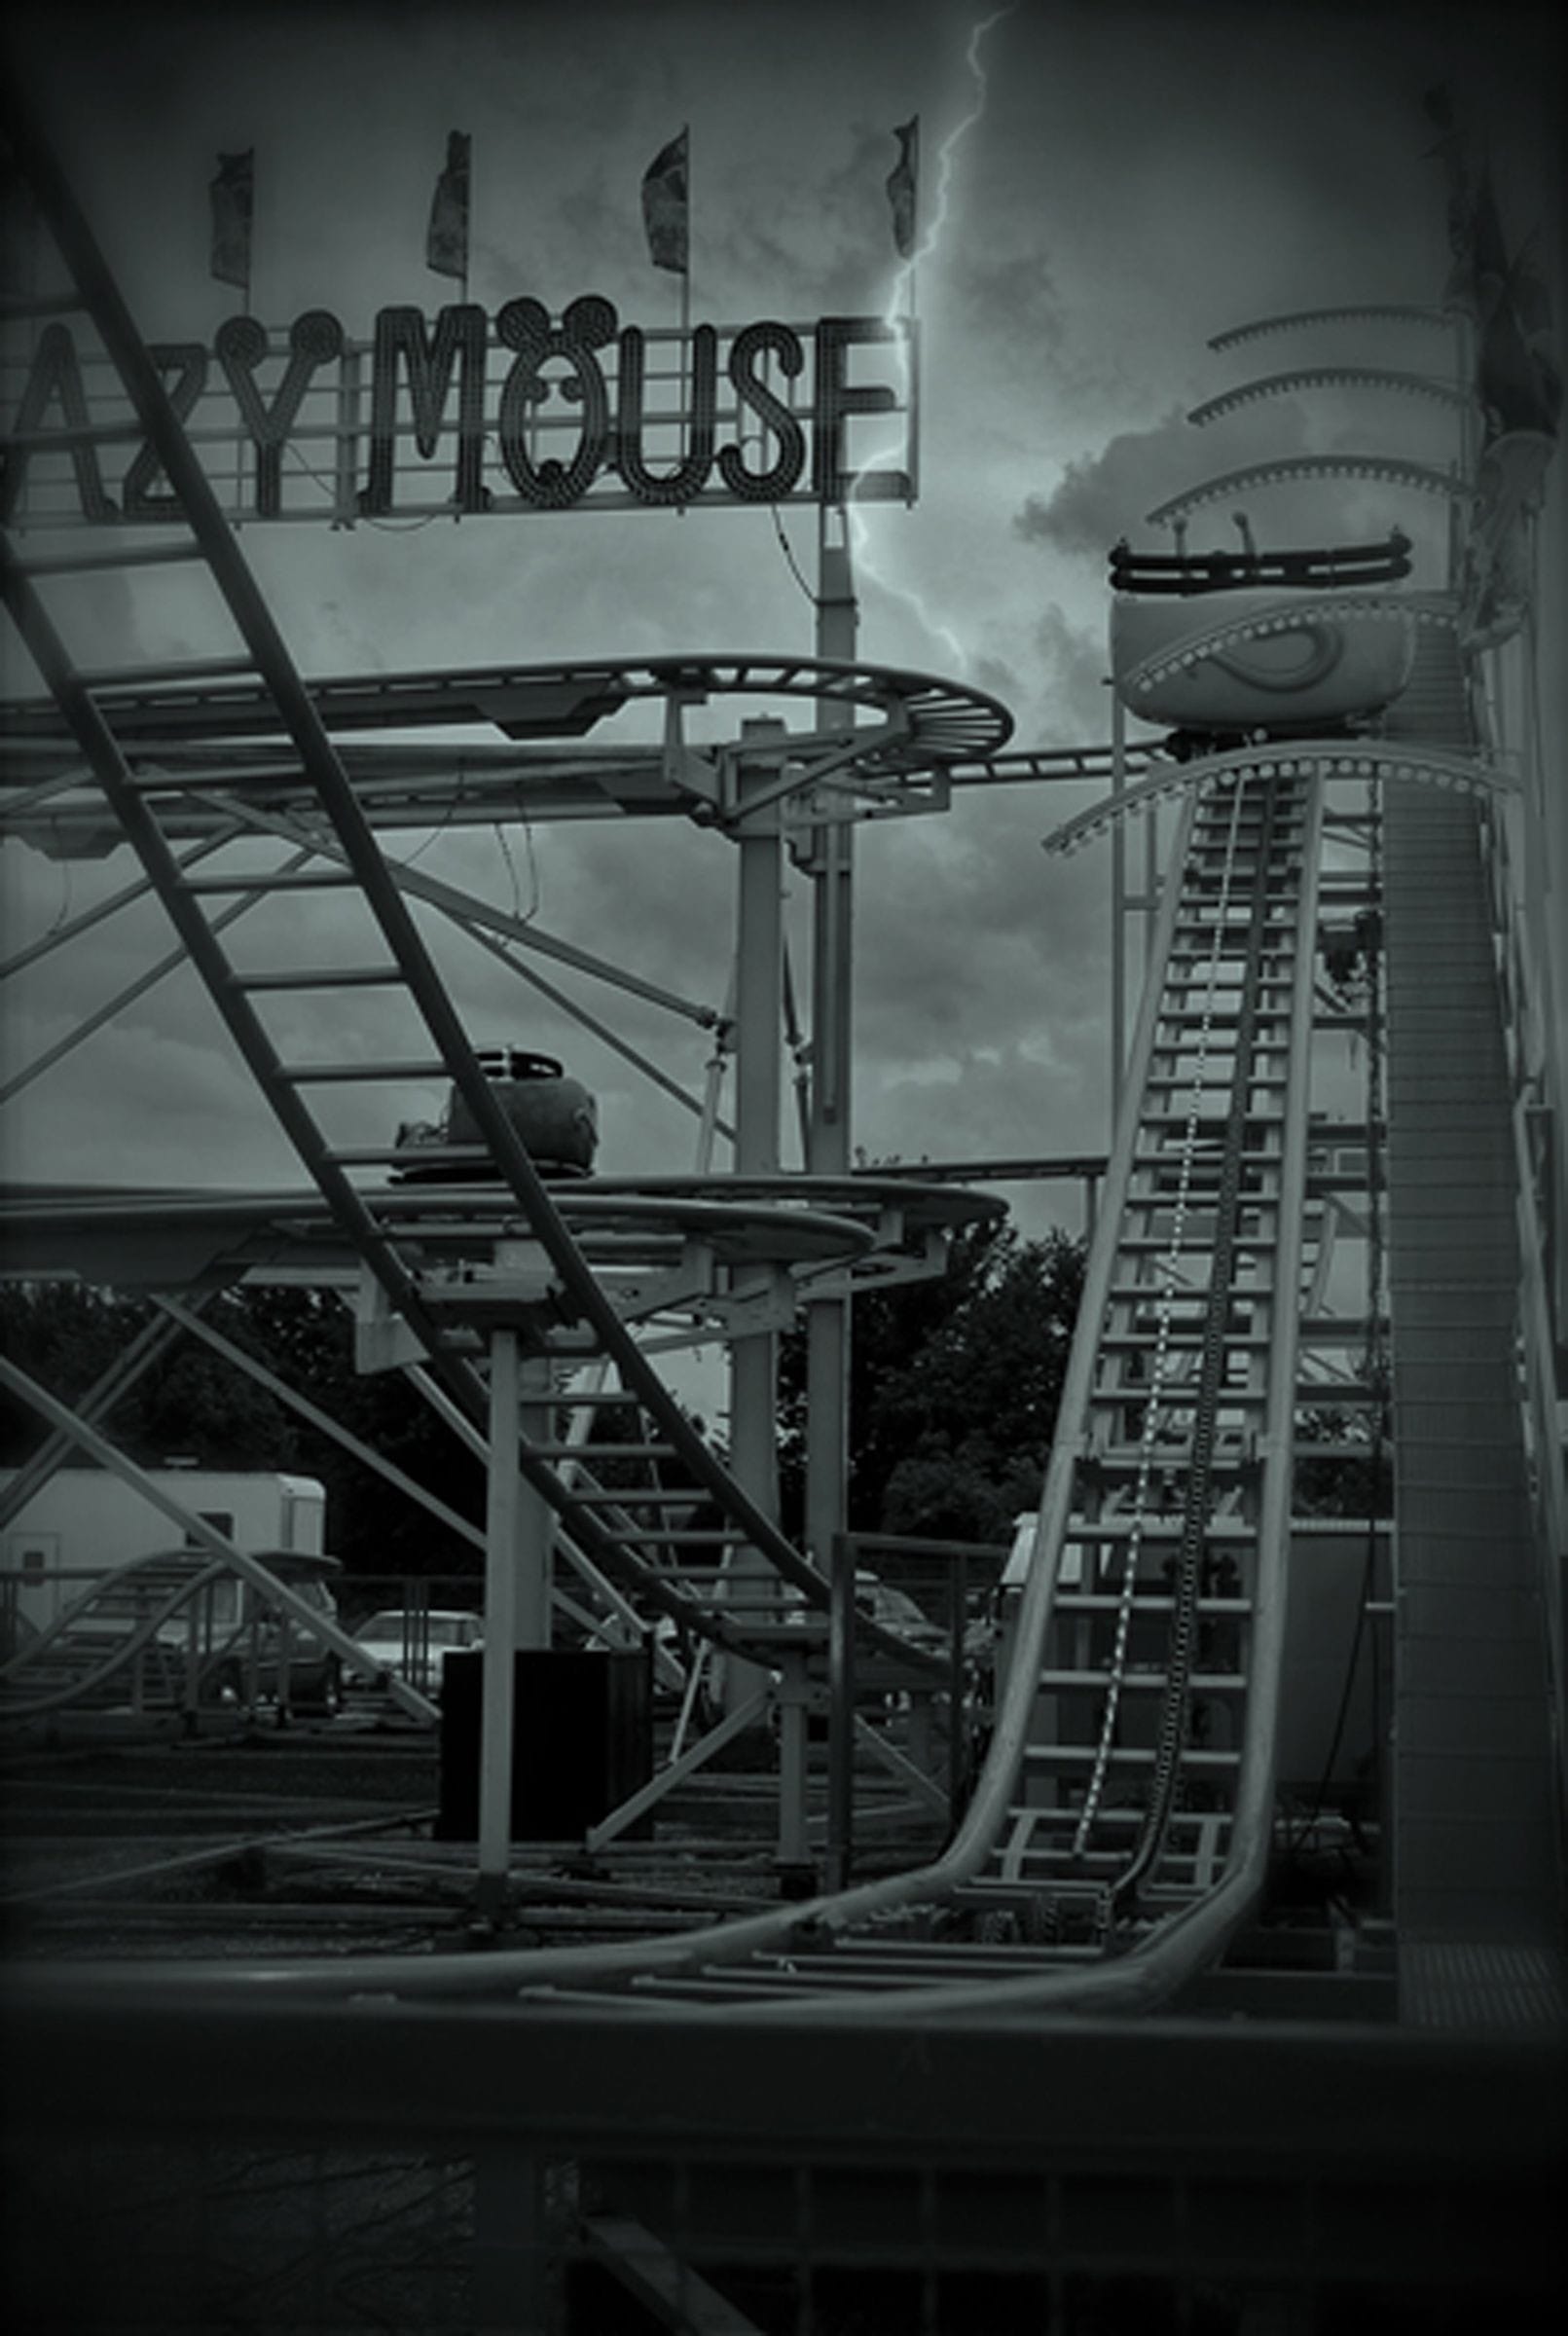 Rollercoaster at Fair.